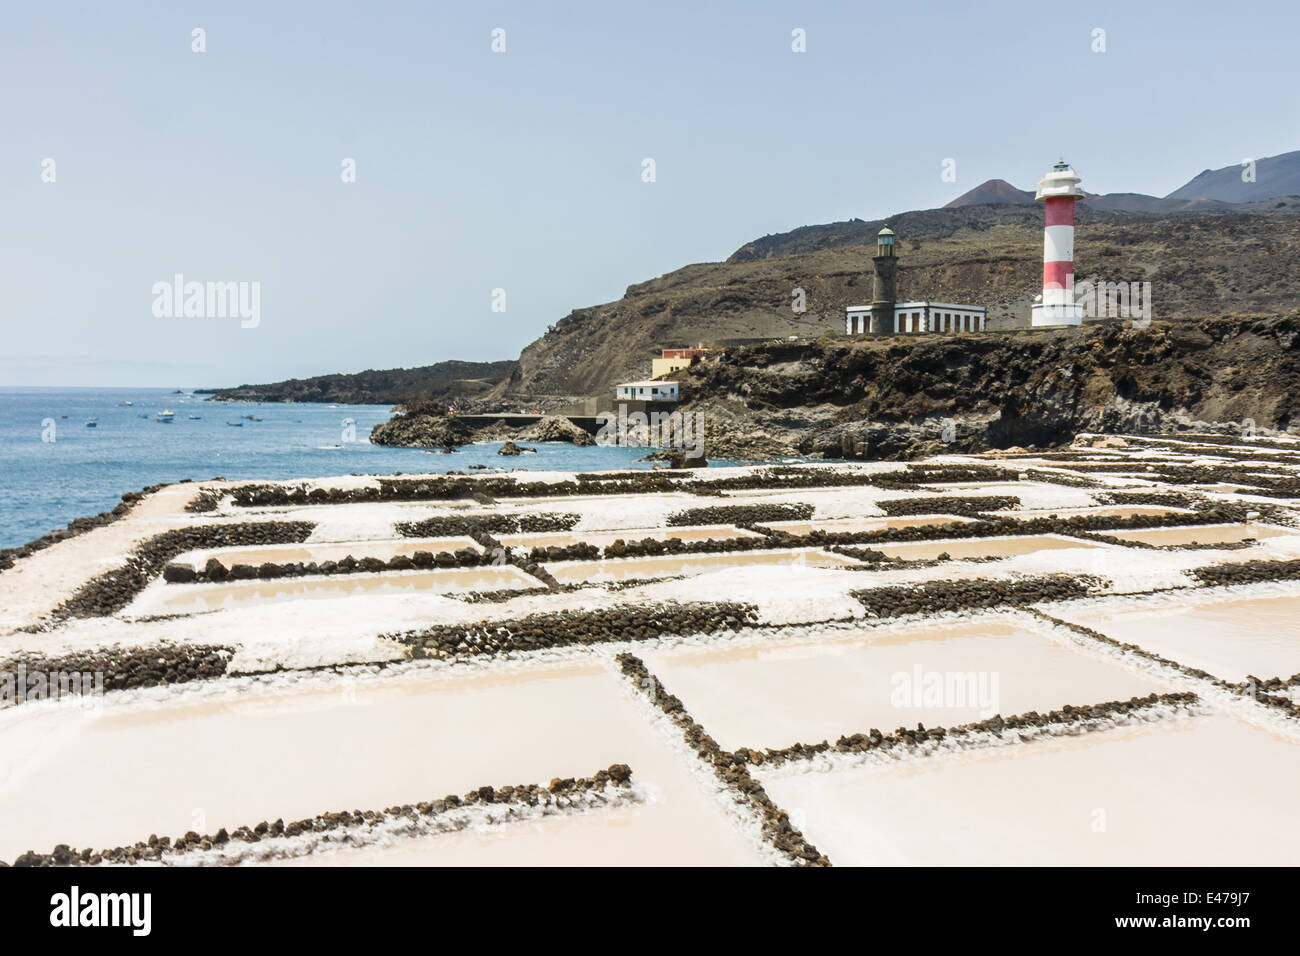 Salt extraction of the sea at La Palma, Canary Islands Stock Photo